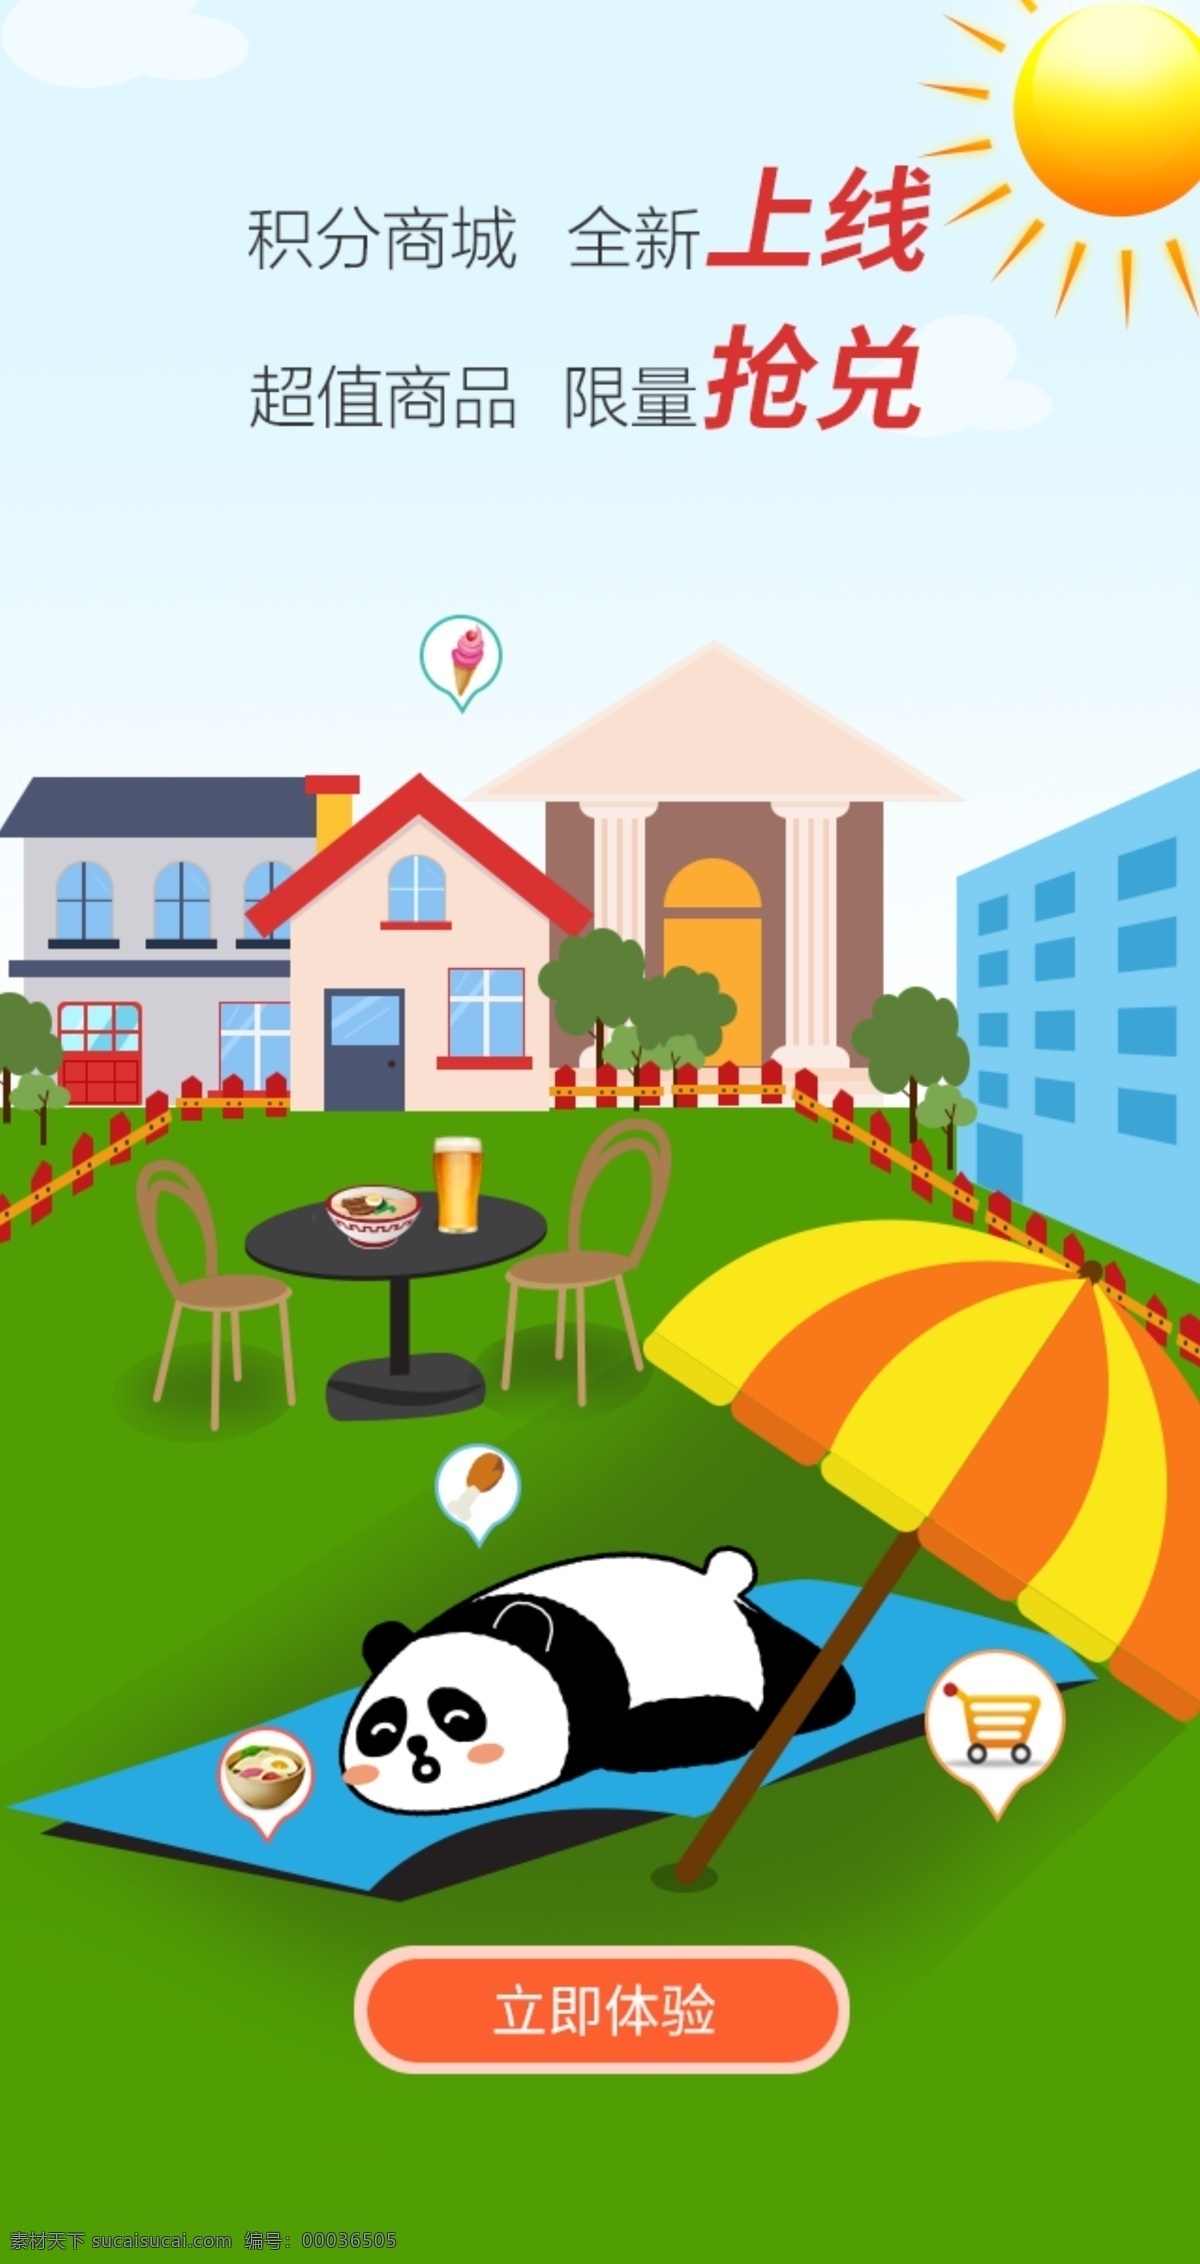 app引导页 卡通画 卡通画风格 积分商城 绿色